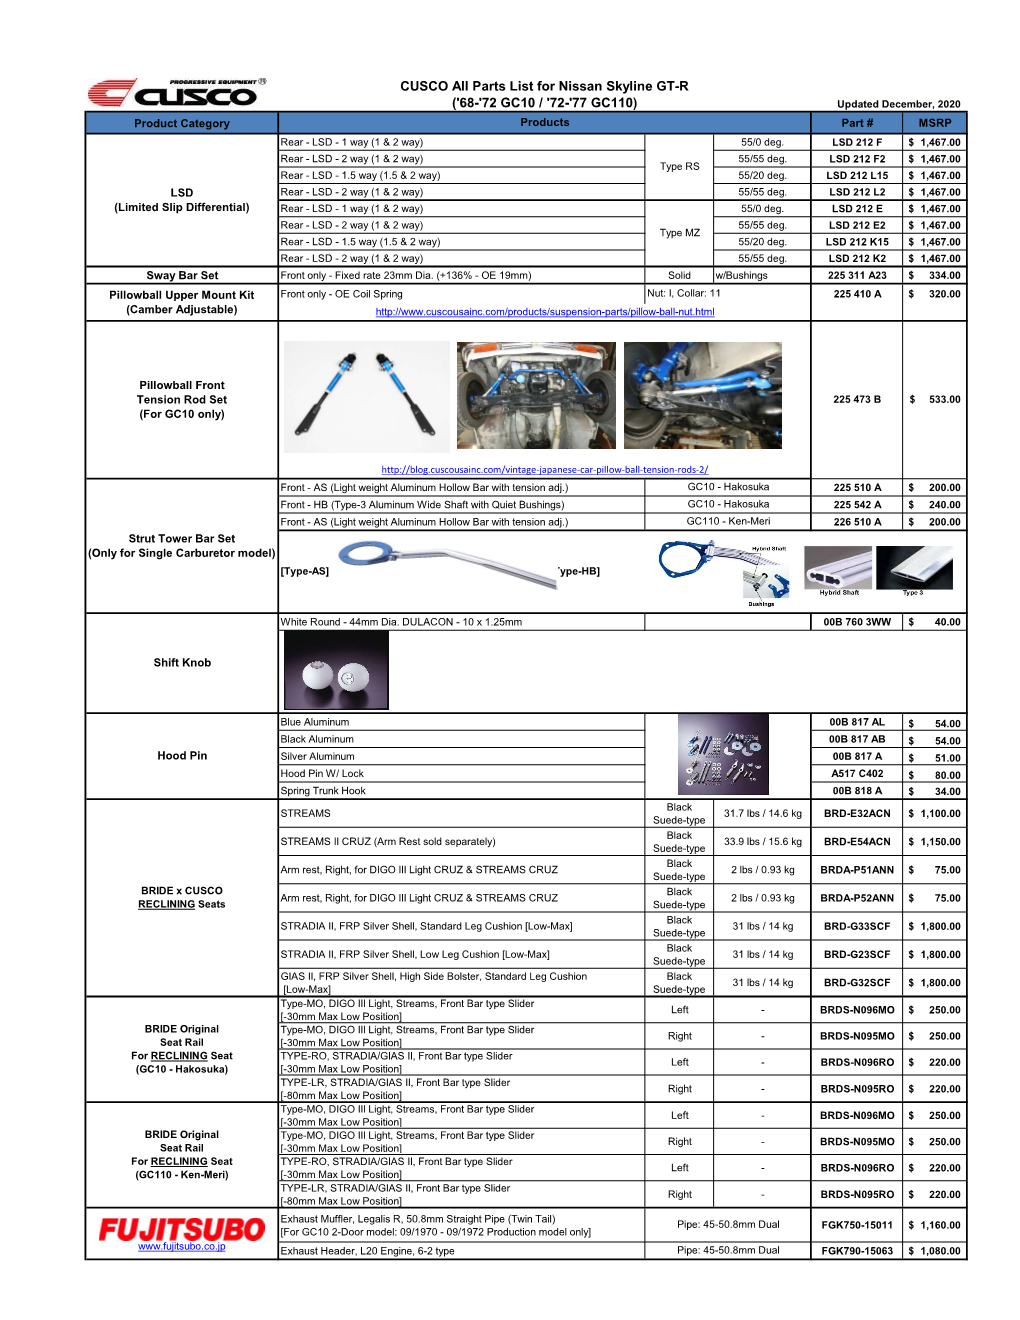 CUSCO Parts List for Nissan Skyline GT-R GC10-R32-R33-R34-R35